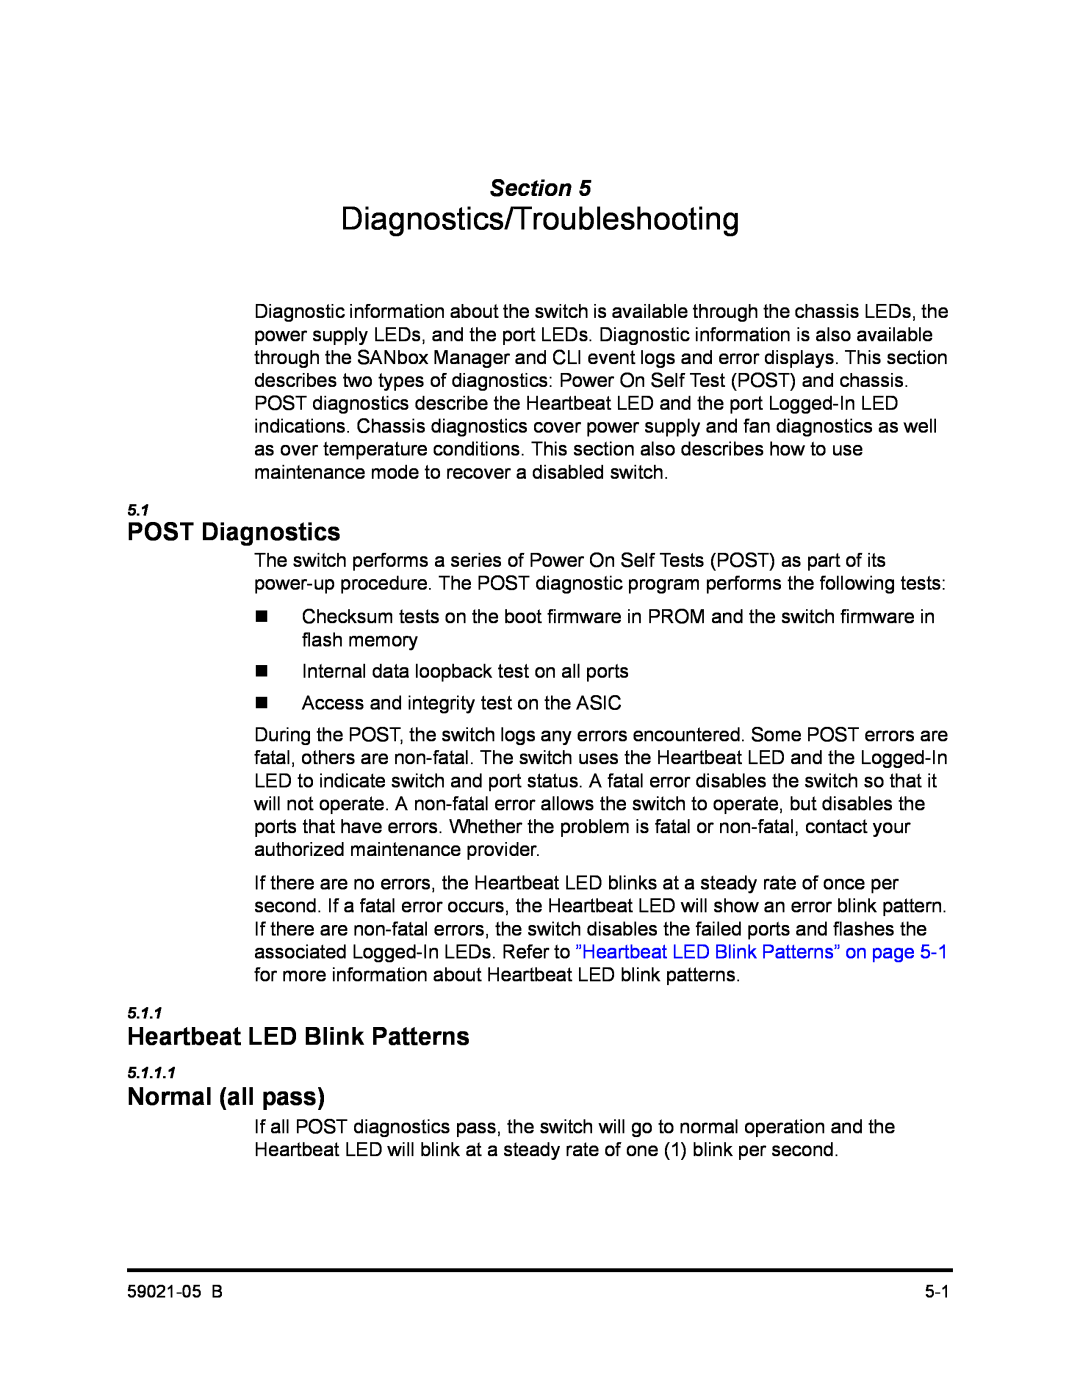 Q-Logic 59021-05 B Diagnostics/Troubleshooting, POST Diagnostics, Heartbeat LED Blink Patterns, Normal all pass, Section 